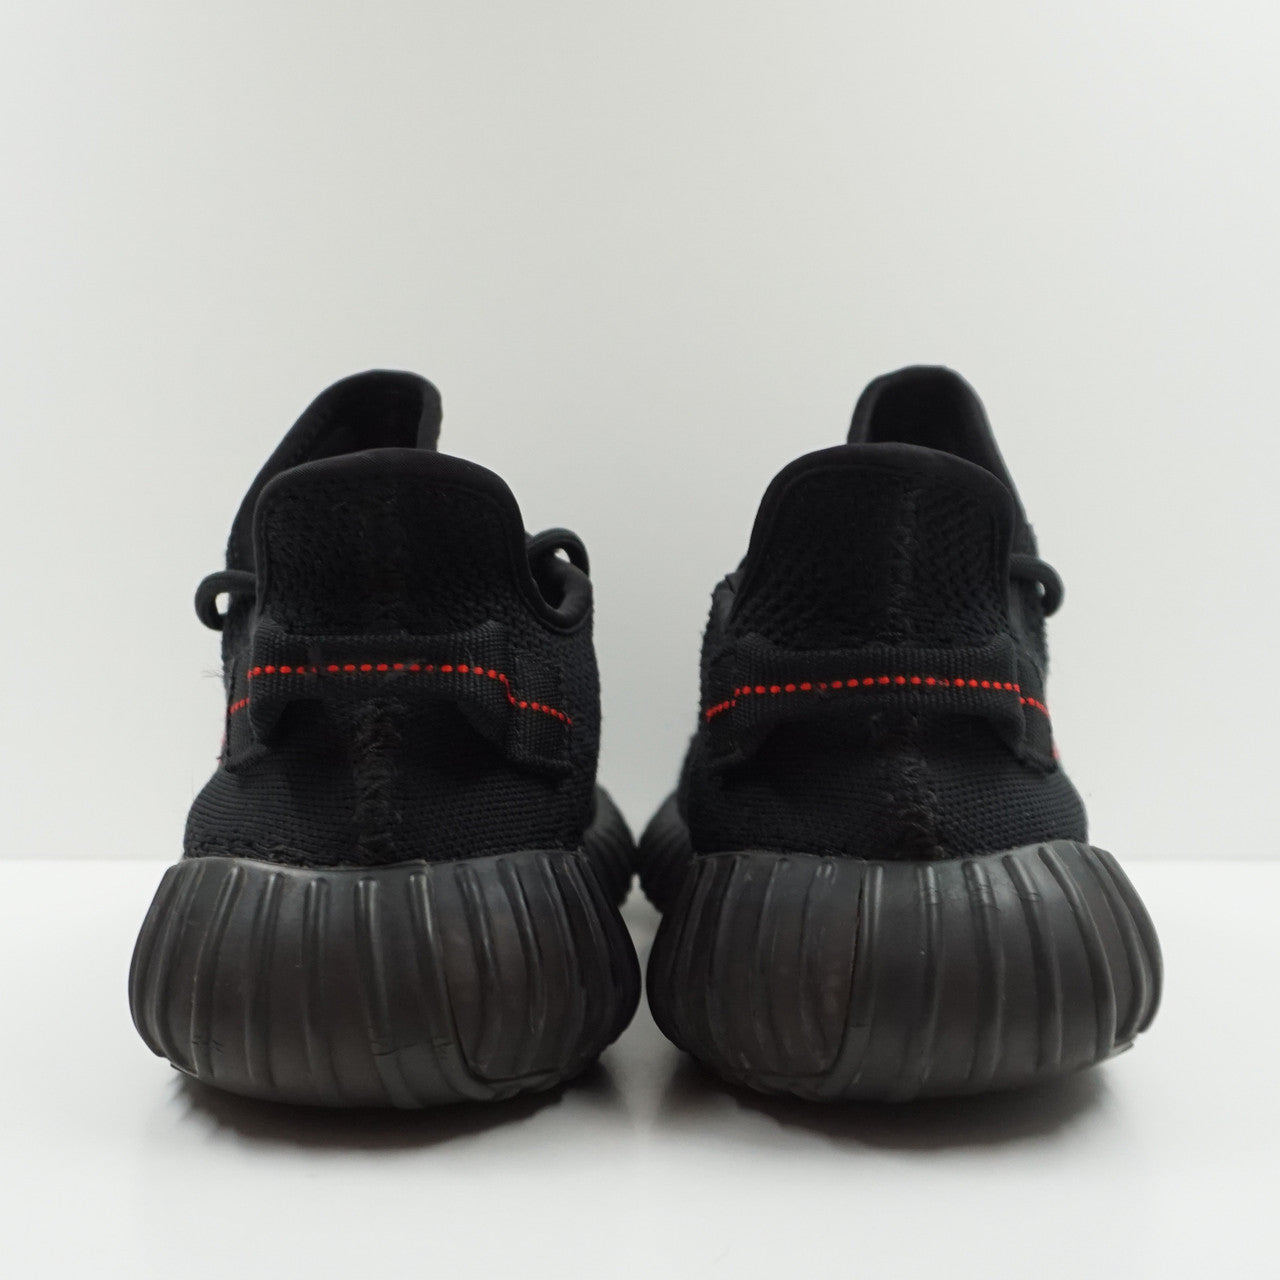 Adidas Yeezy Boost 350 V2 Black Red (2020)